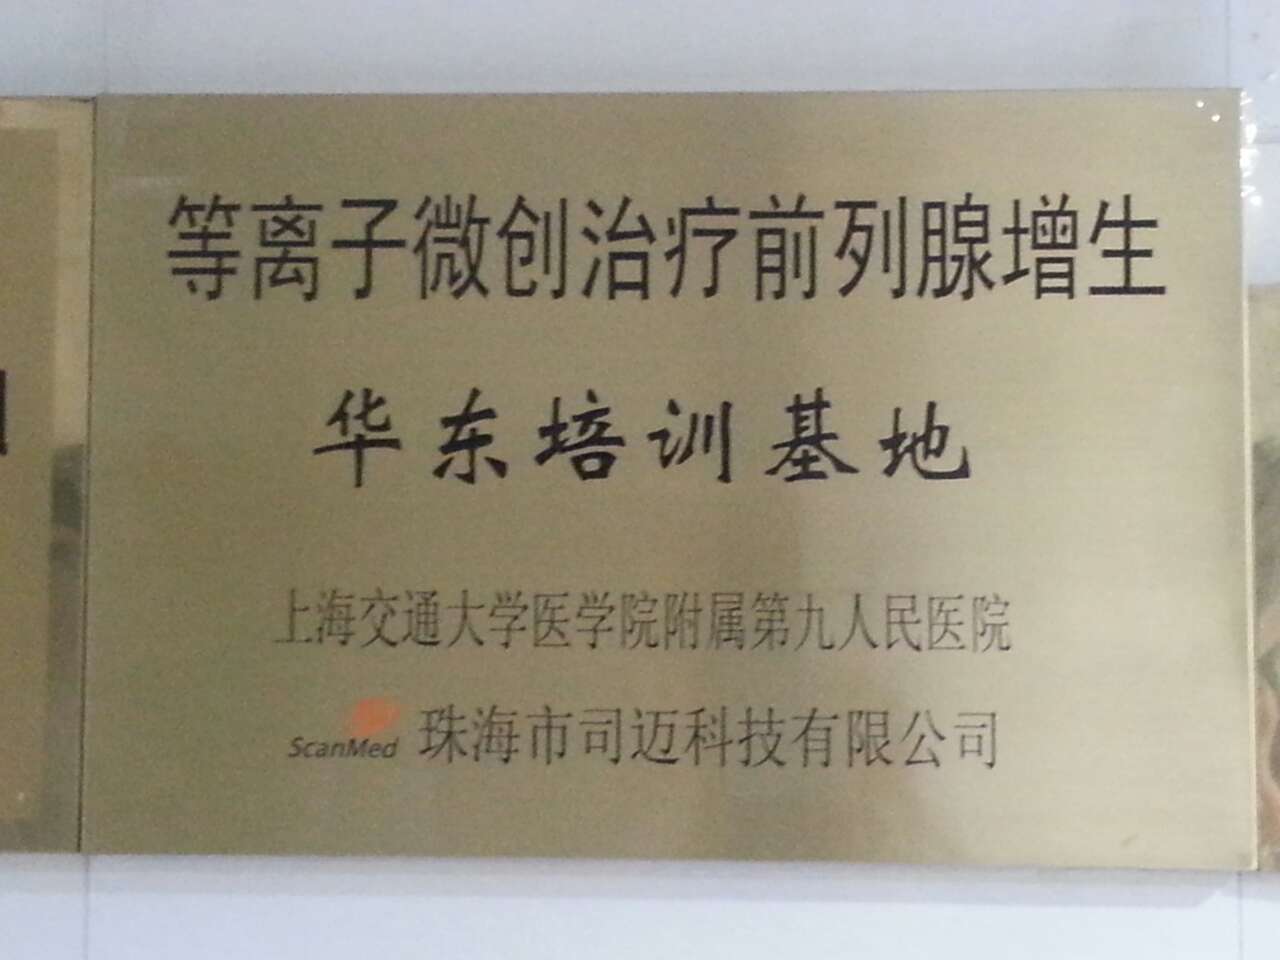 East China training base of Shanghai Jiuyuan